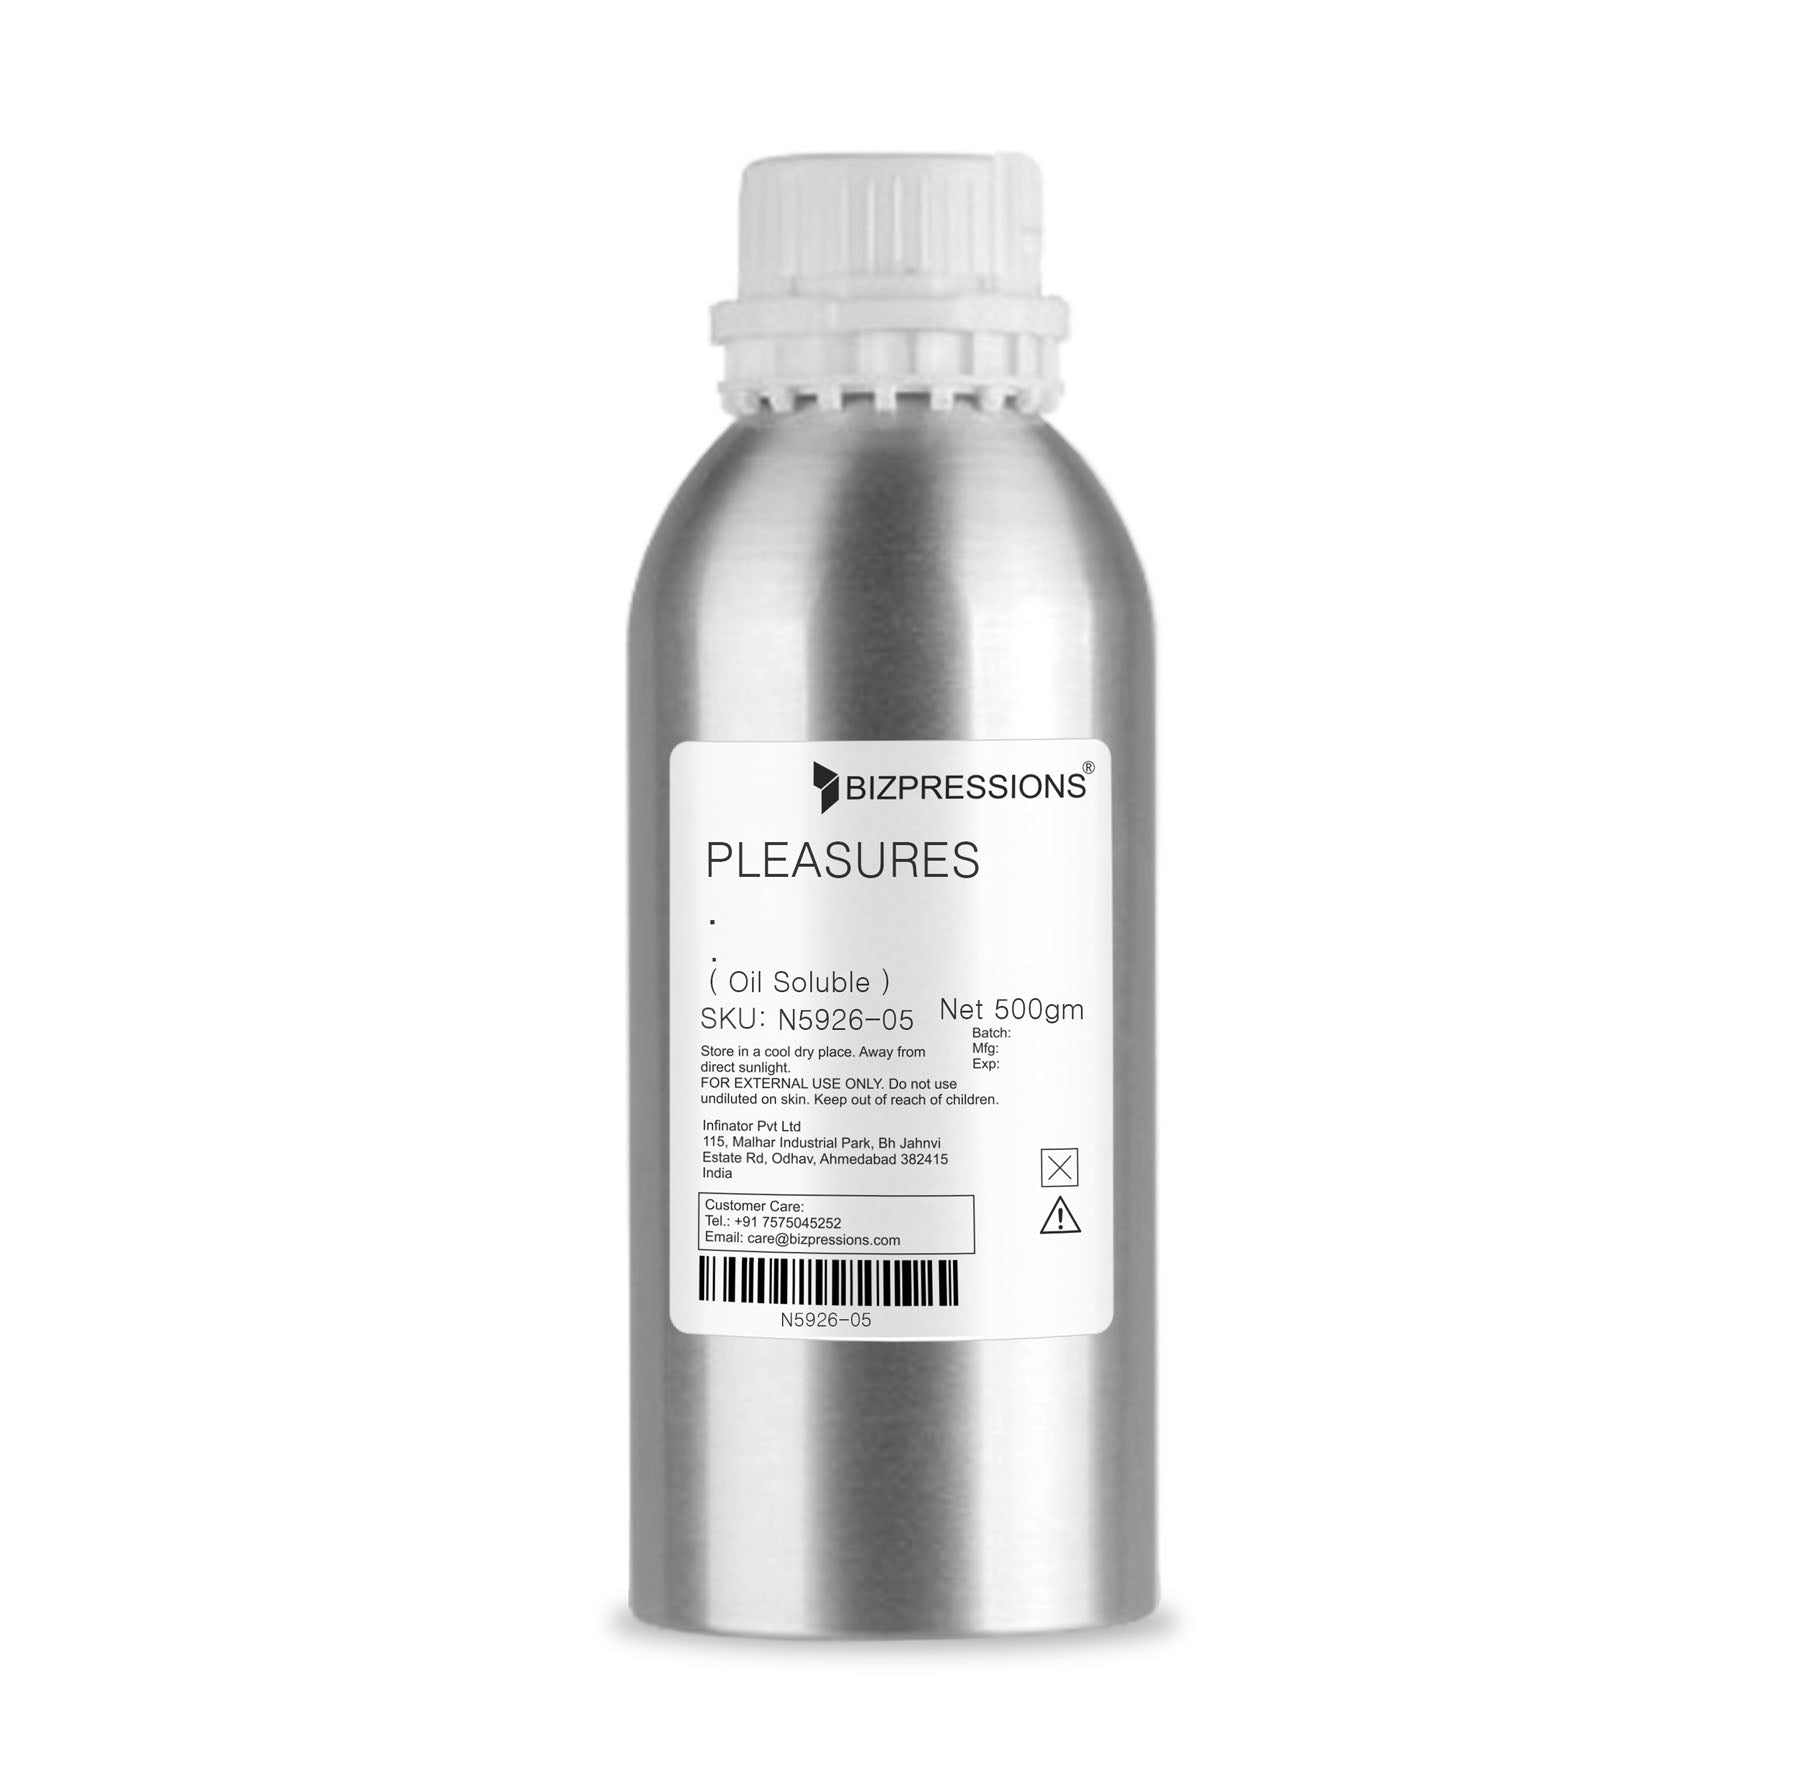 PLEASURES - Fragrance ( Oil Soluble ) - 500 gm